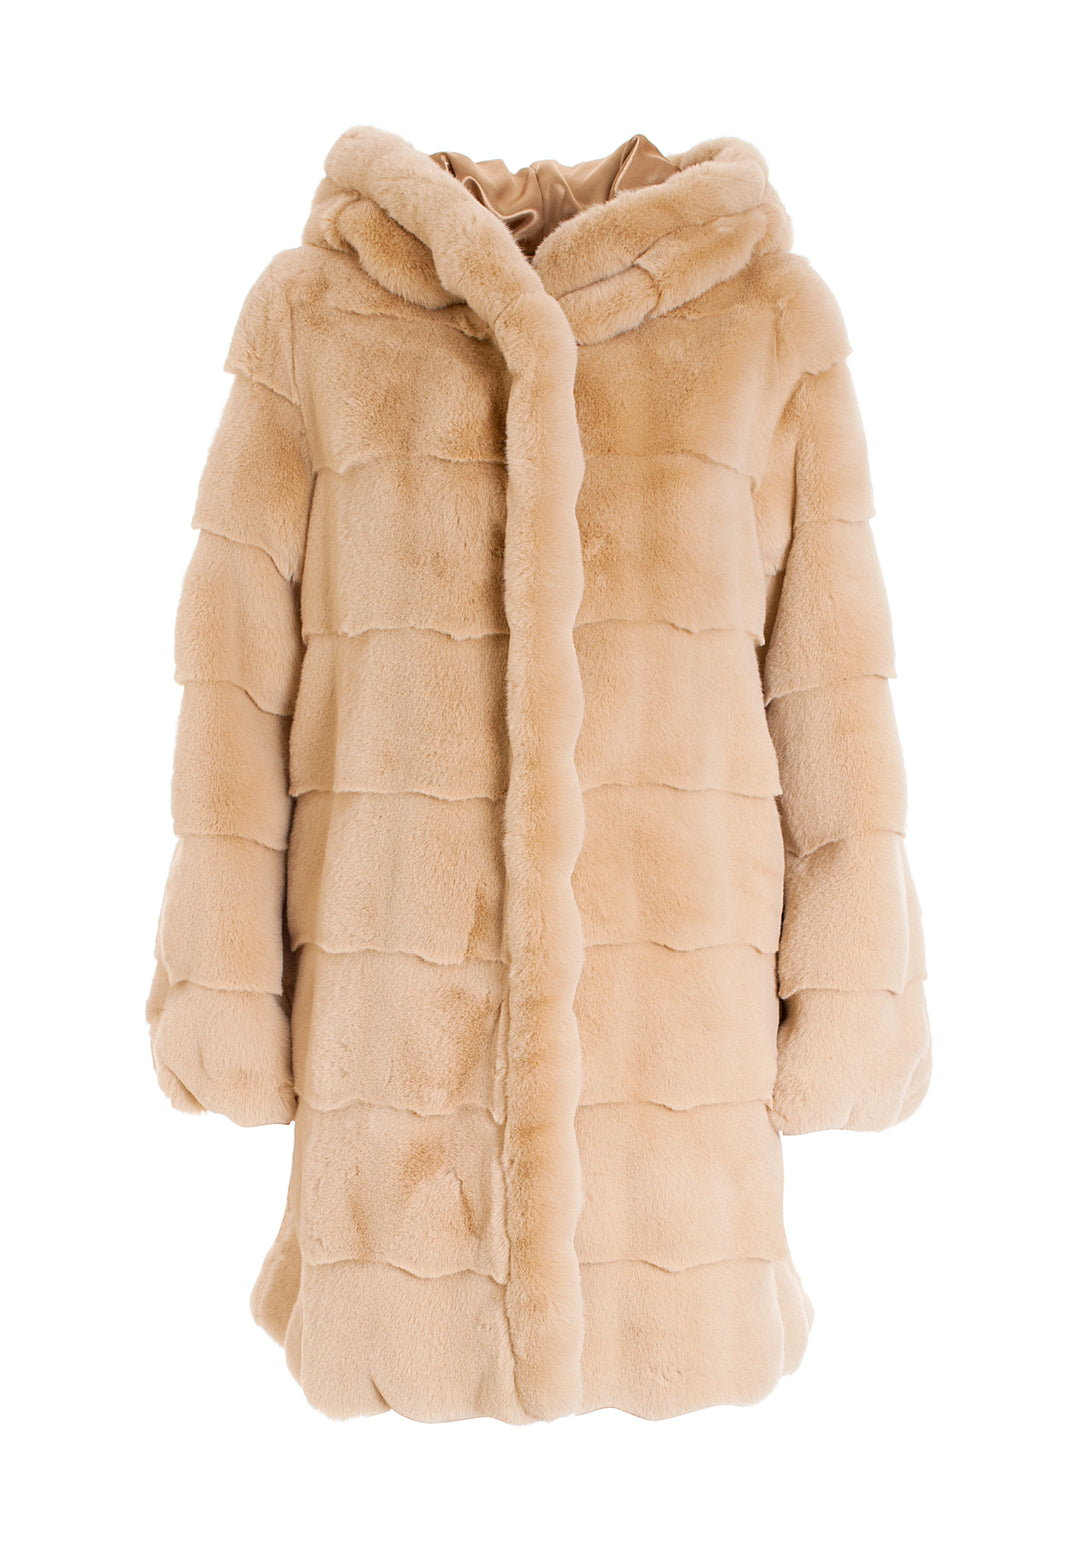 Jacket regular fit made in eco fur